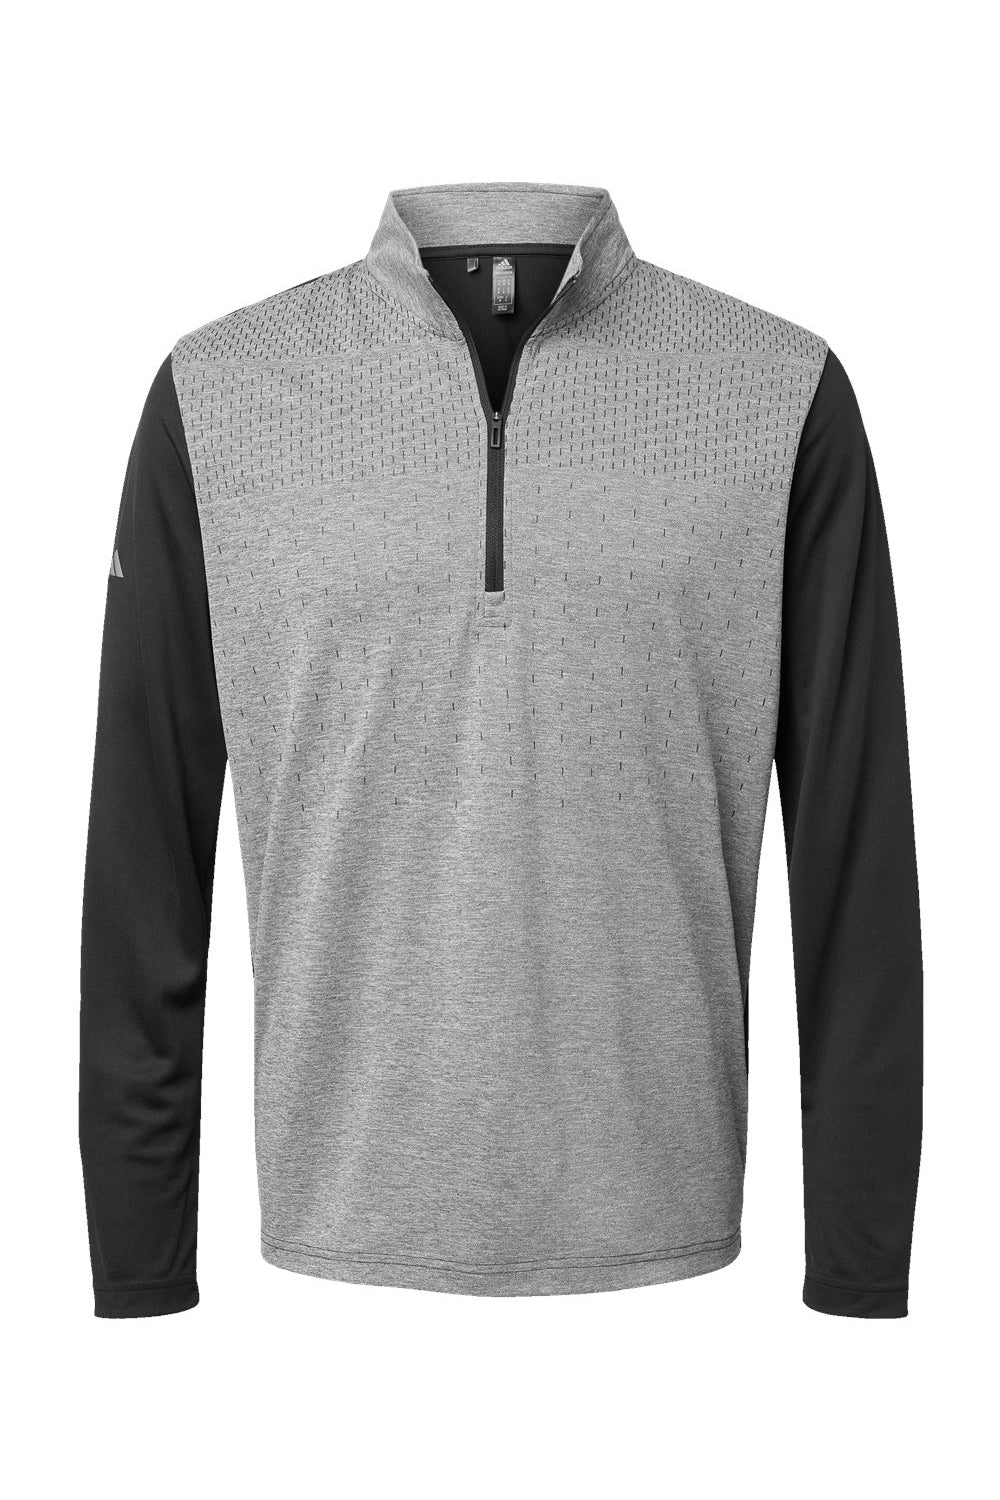 Adidas A522 Mens Heather Block Print Moisture Wicking 1/4 Zip Sweatshirt Black Melange/Black/Grey Flat Front